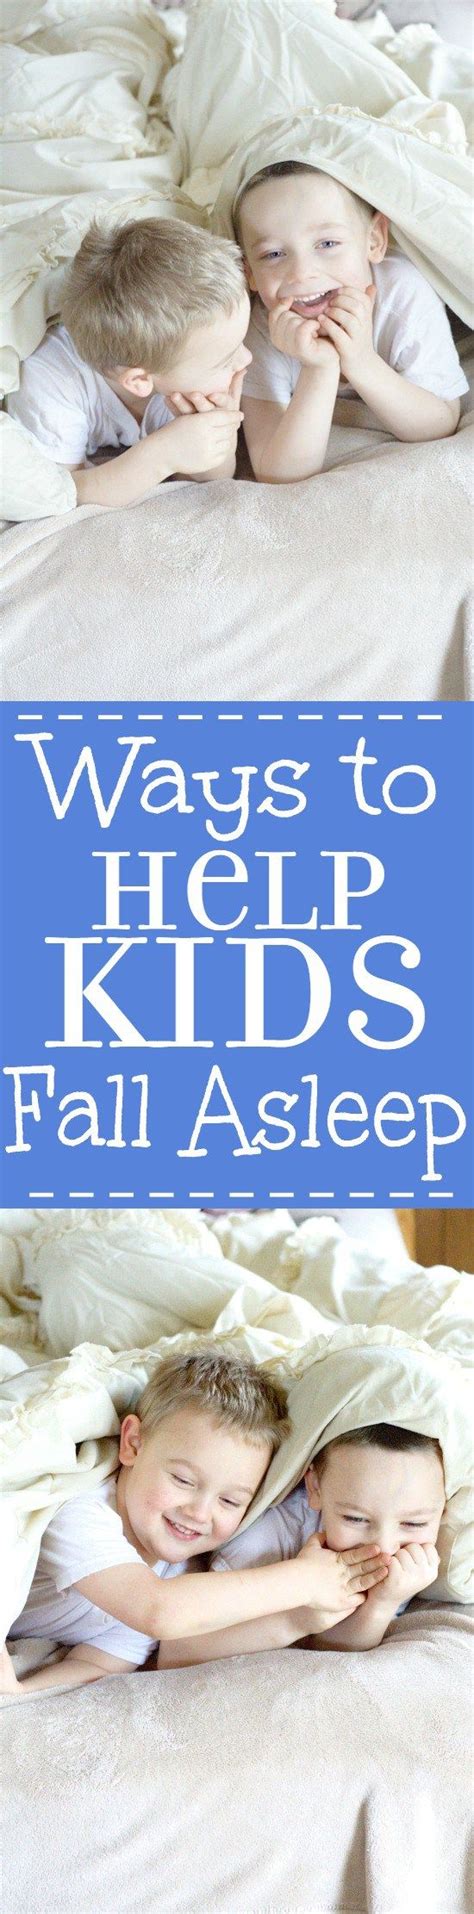 10 Ways To Help Kids Fall Asleep Fall Kids How To Fall Asleep